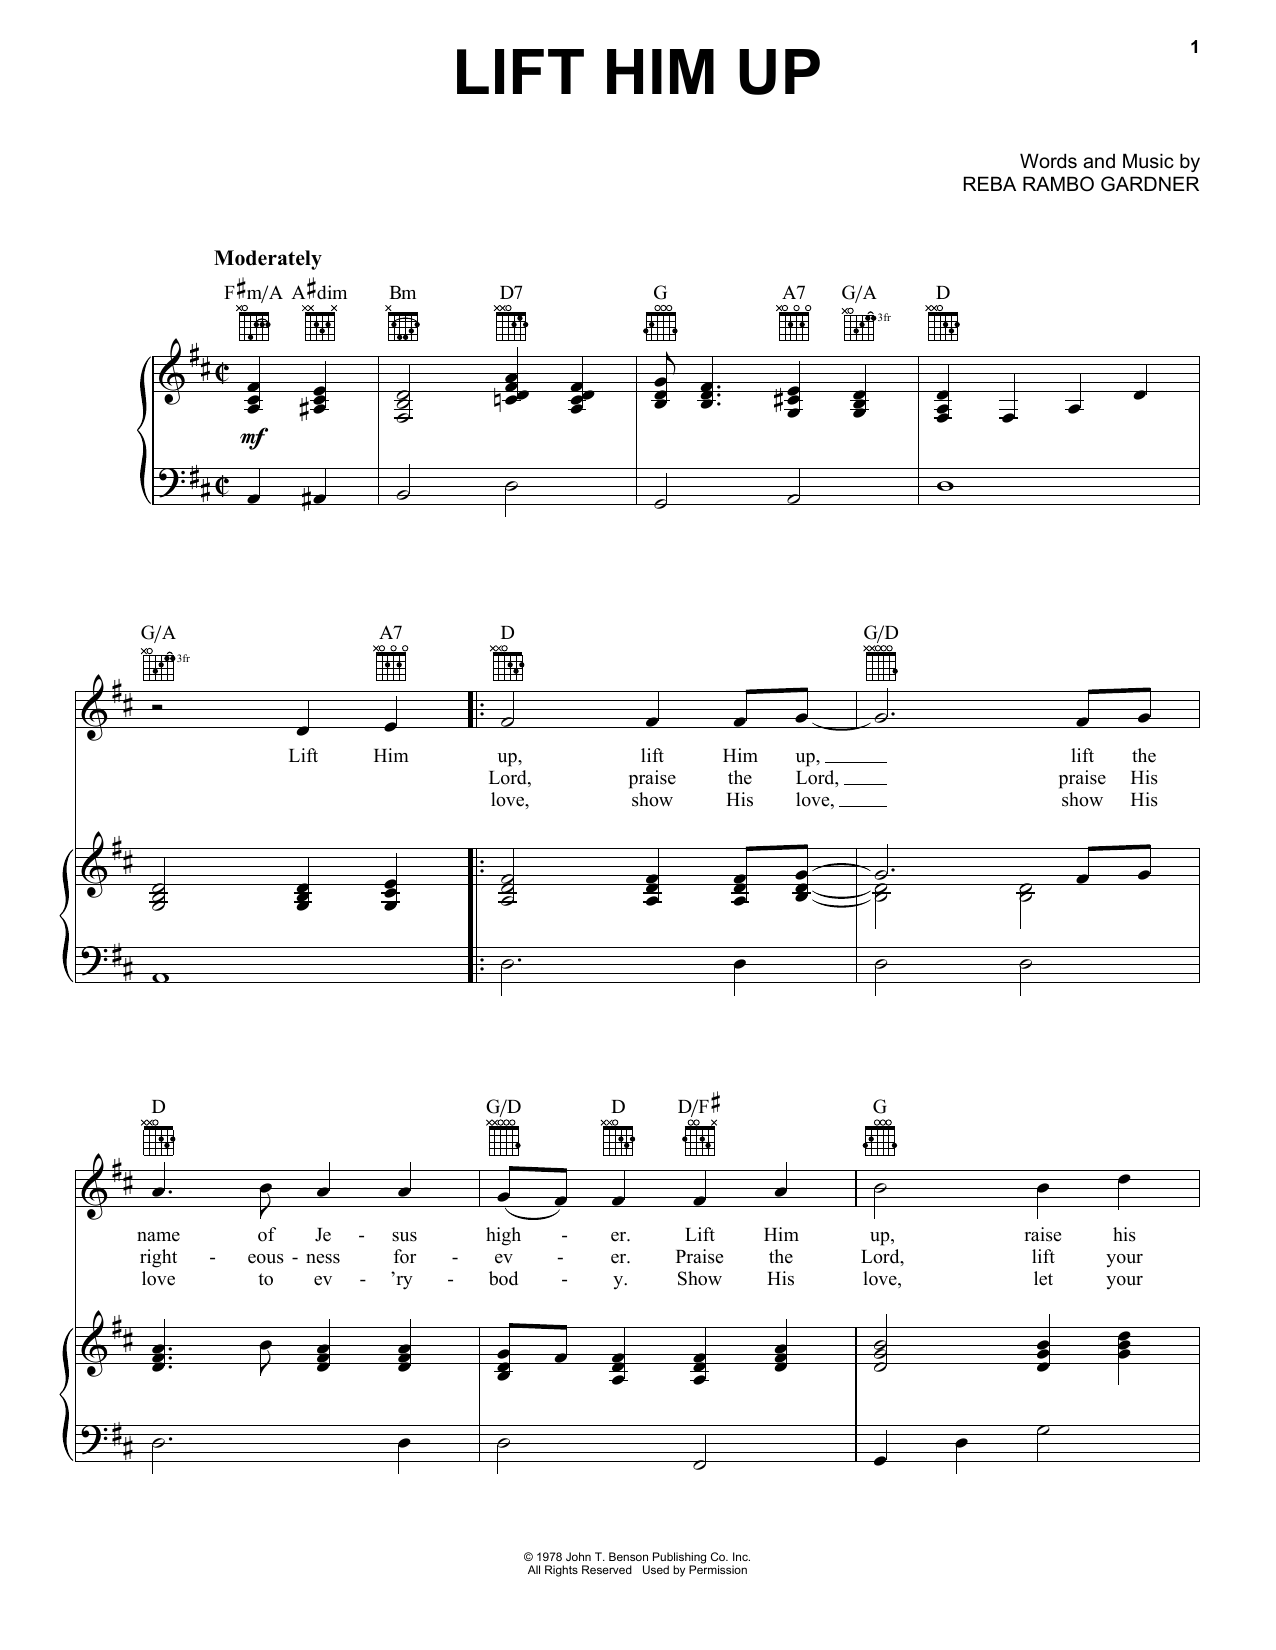 Reba Rambo Gardner Lift Him Up Sheet Music Notes & Chords for Easy Piano - Download or Print PDF